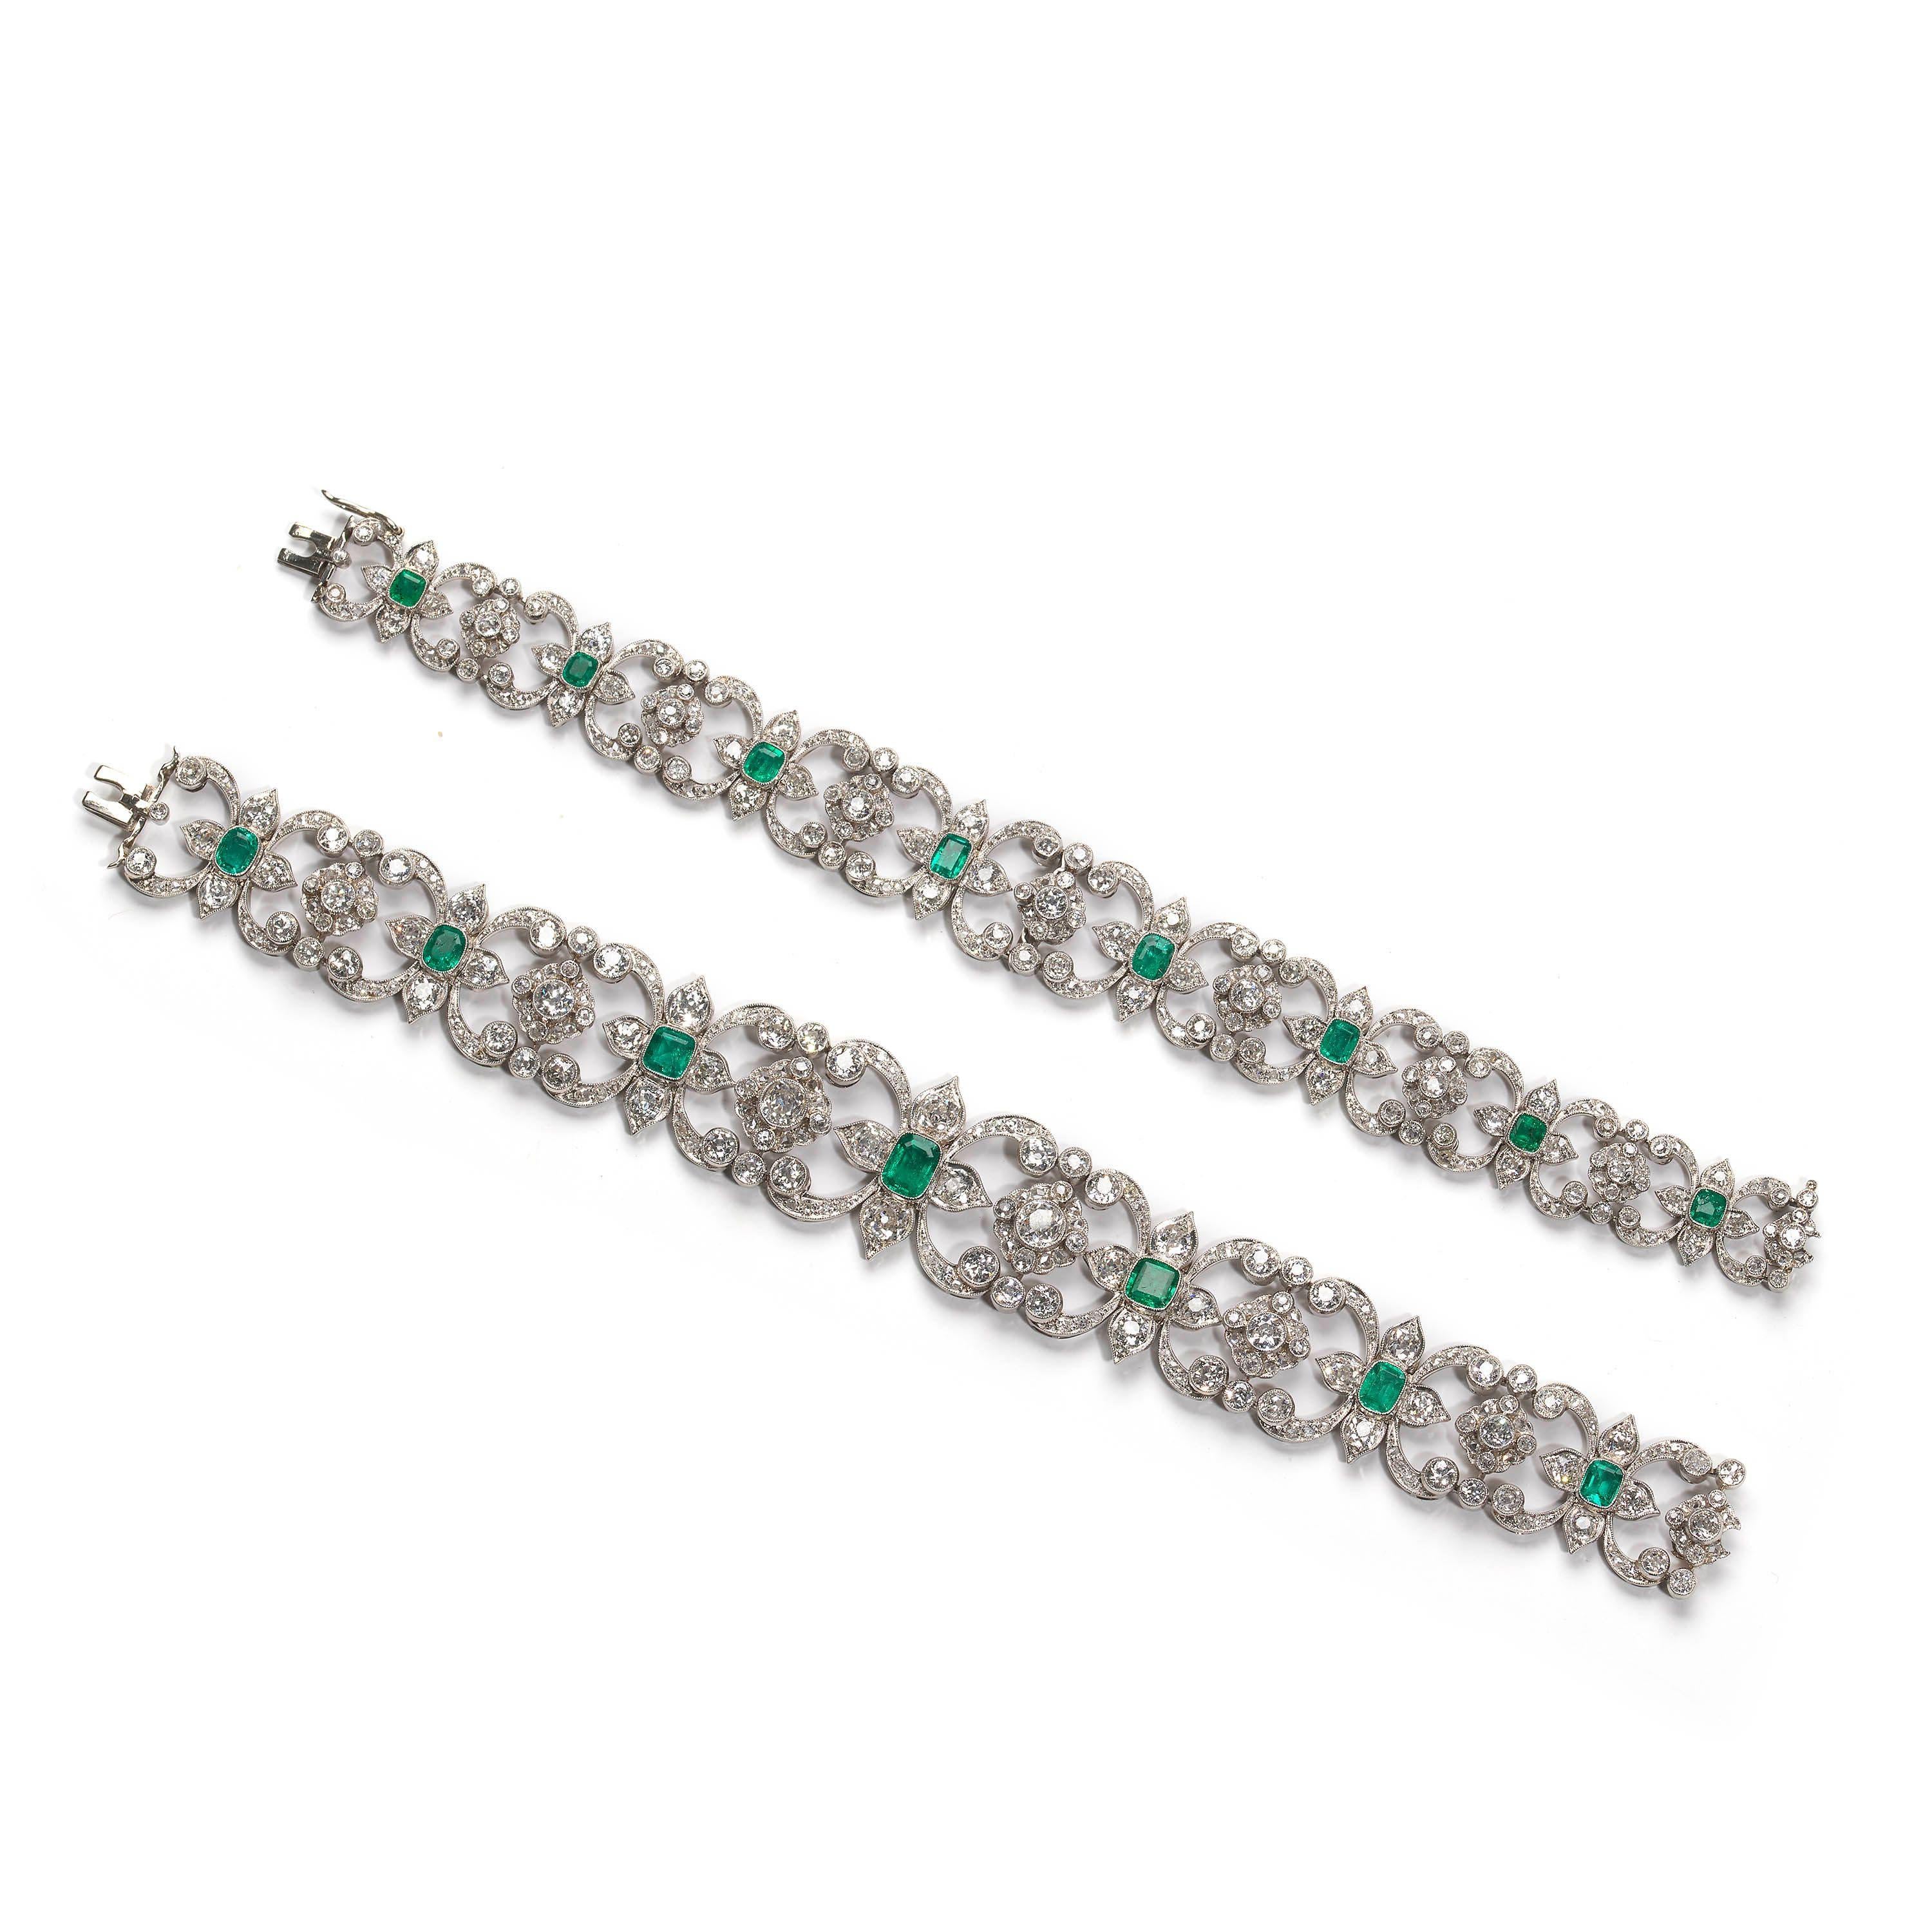 Women's Edwardian Tiara Necklace and Bracelets with Emerald, Diamond and Platinum